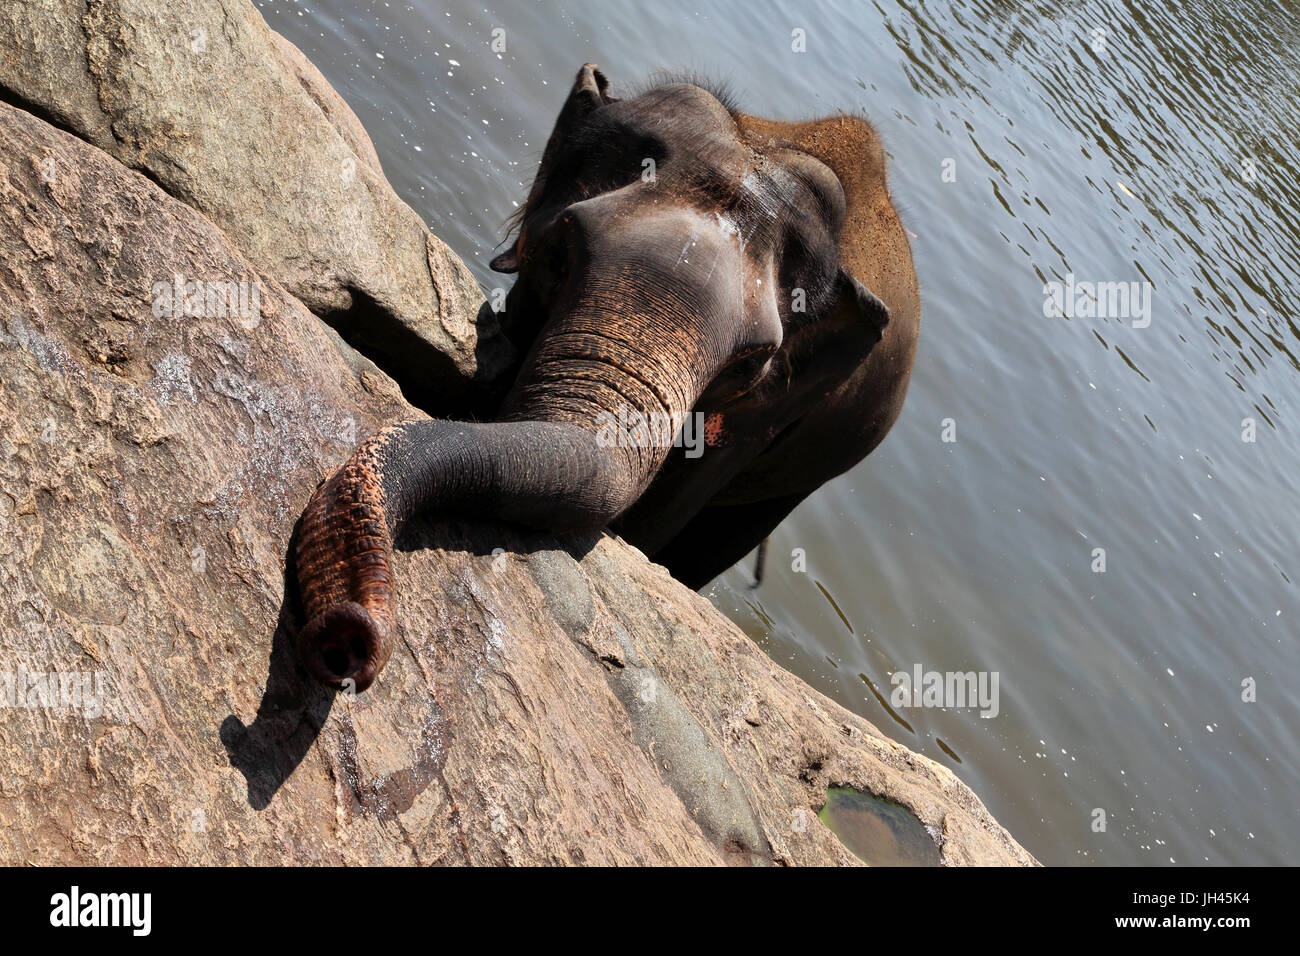 Pinnawala Central Province Sri Lanka Pinnawala Elephant Orphanage elephant bathing in Ma Oya River Stock Photo